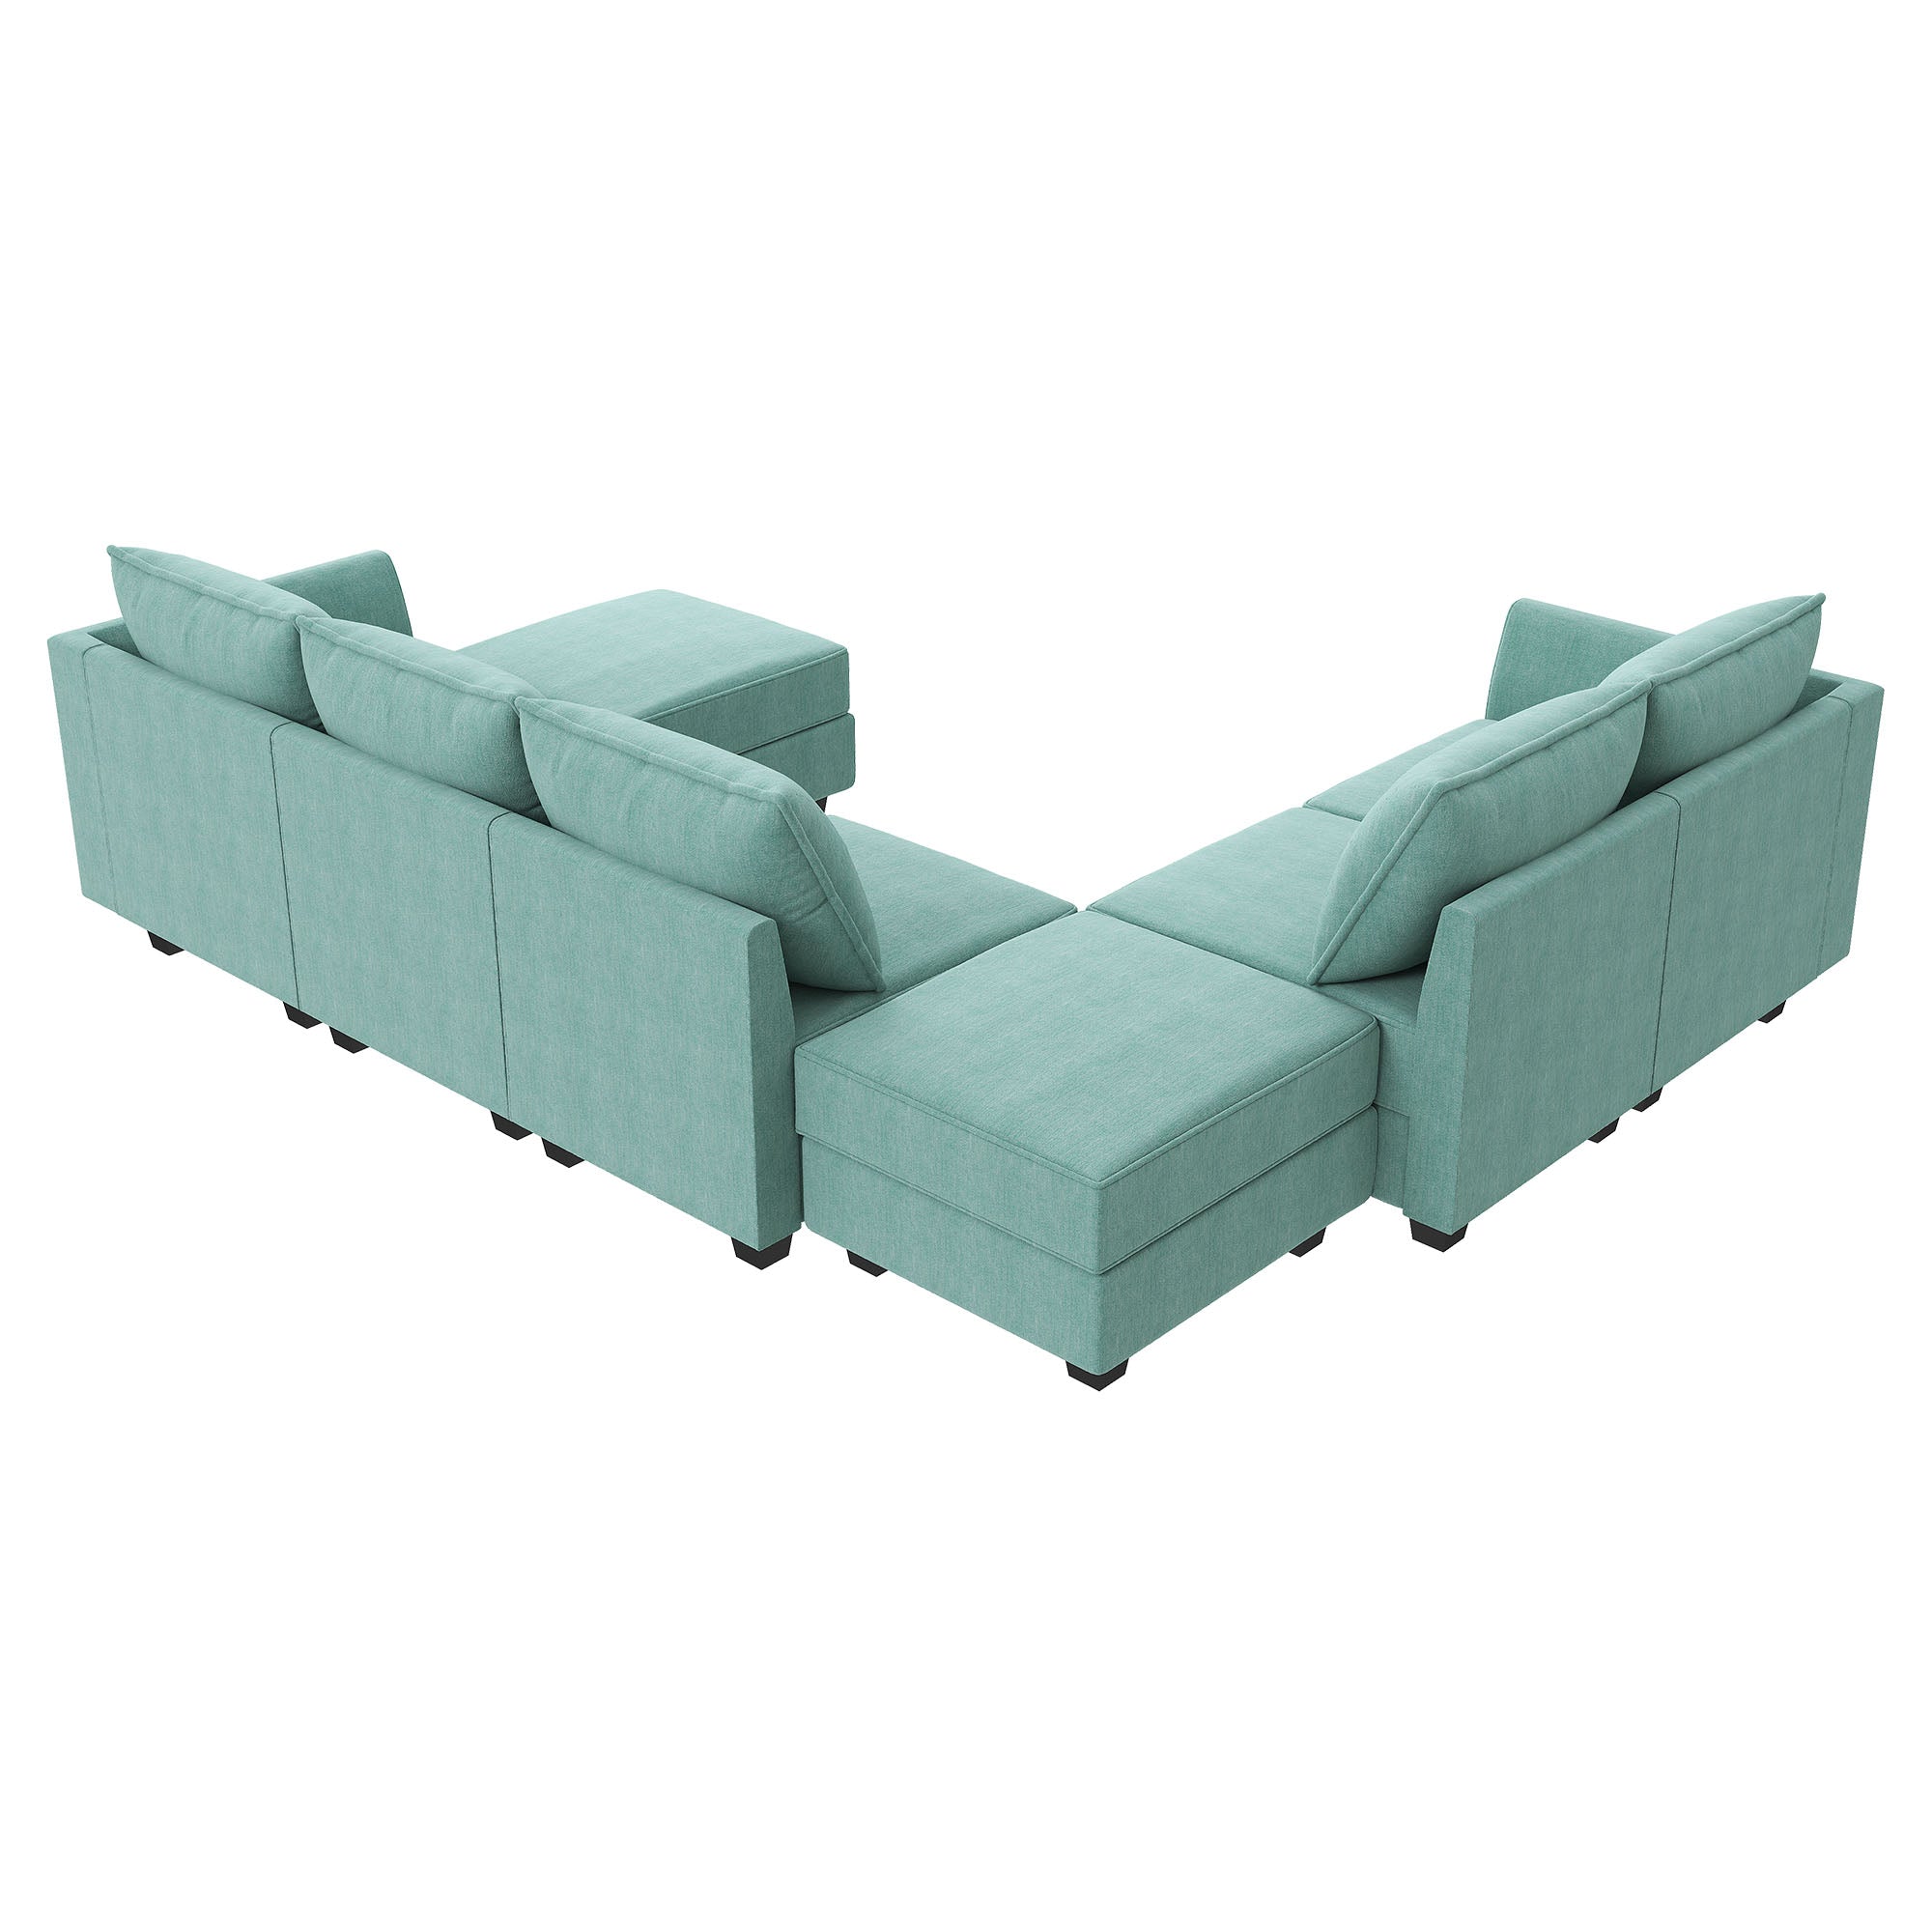 HONBAY High Quality Flexible Modular Sofa with Storage Space